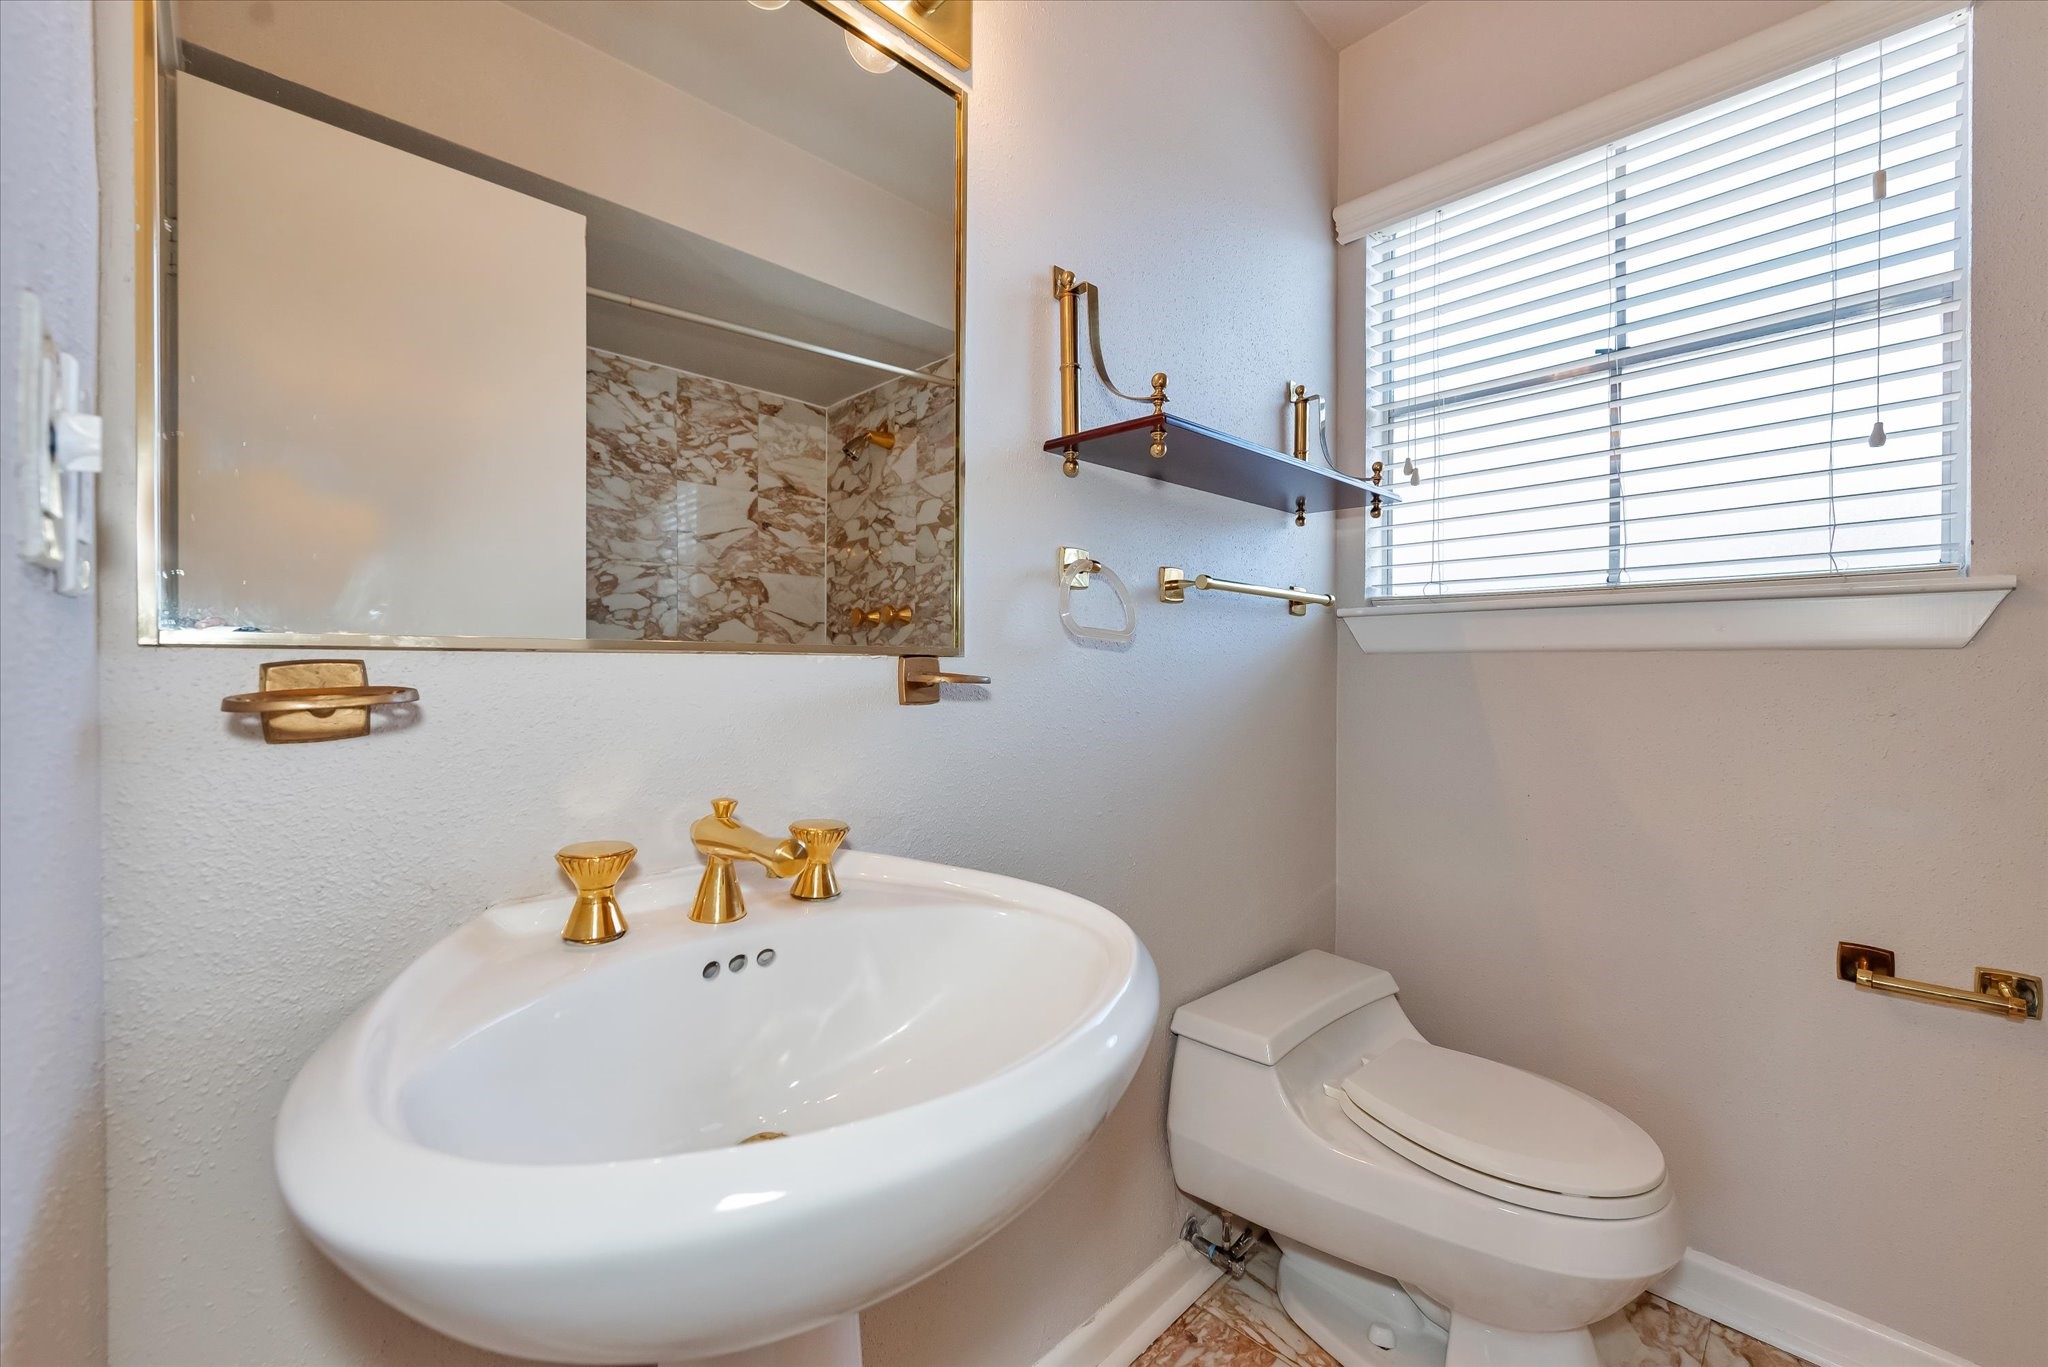 Hall bath has pedestal sink, marble tile, gold fixtures.